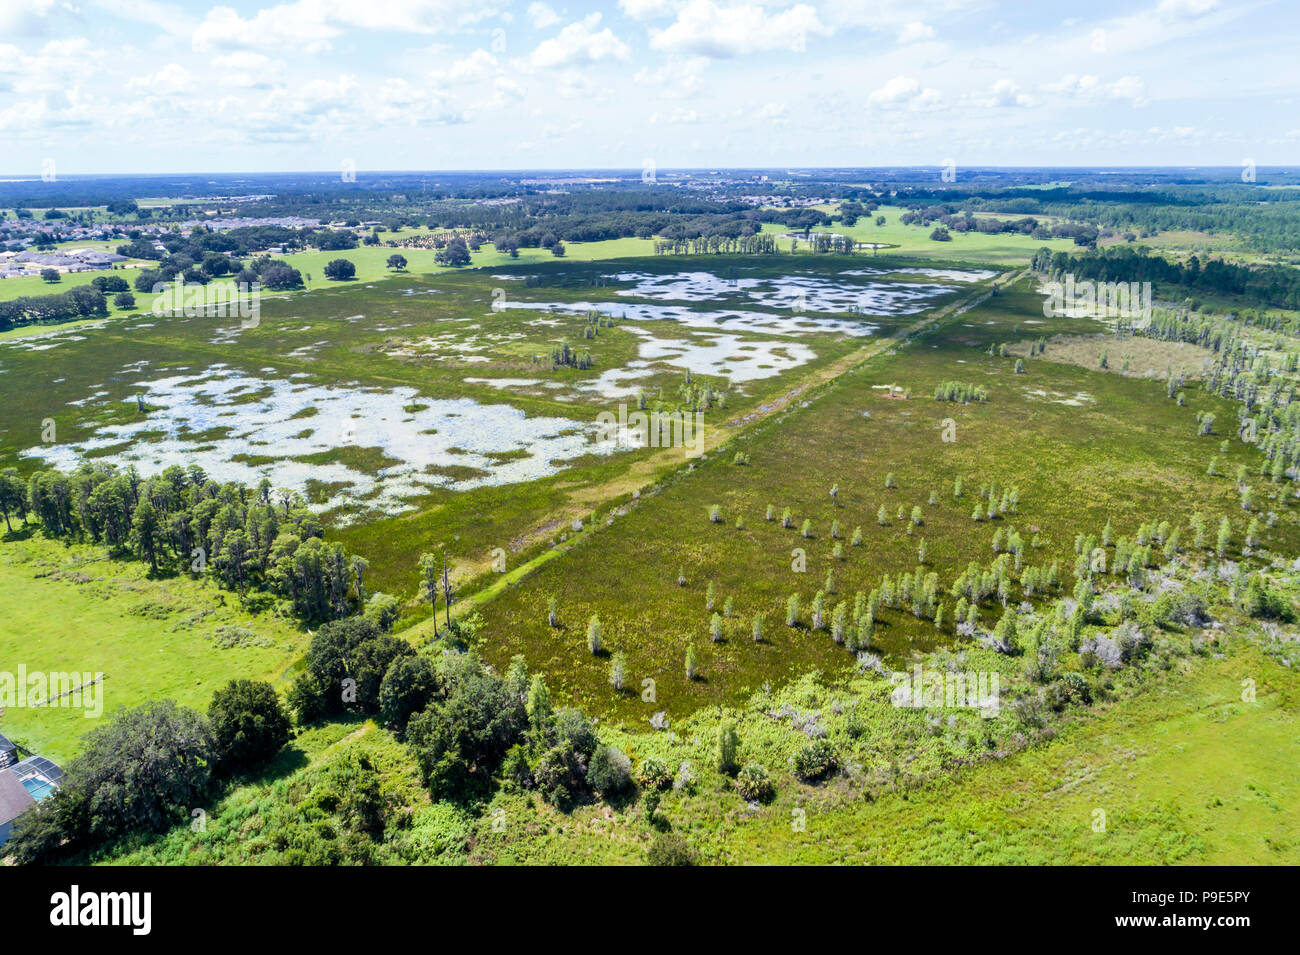 Orlando Florida,Davenport,Hilochee Wildlife Management Area zone umide altopiani bacini paludosi prateria umida,ecosistema Green Swamp,vista aerea dall'alto,FL1807 Foto Stock